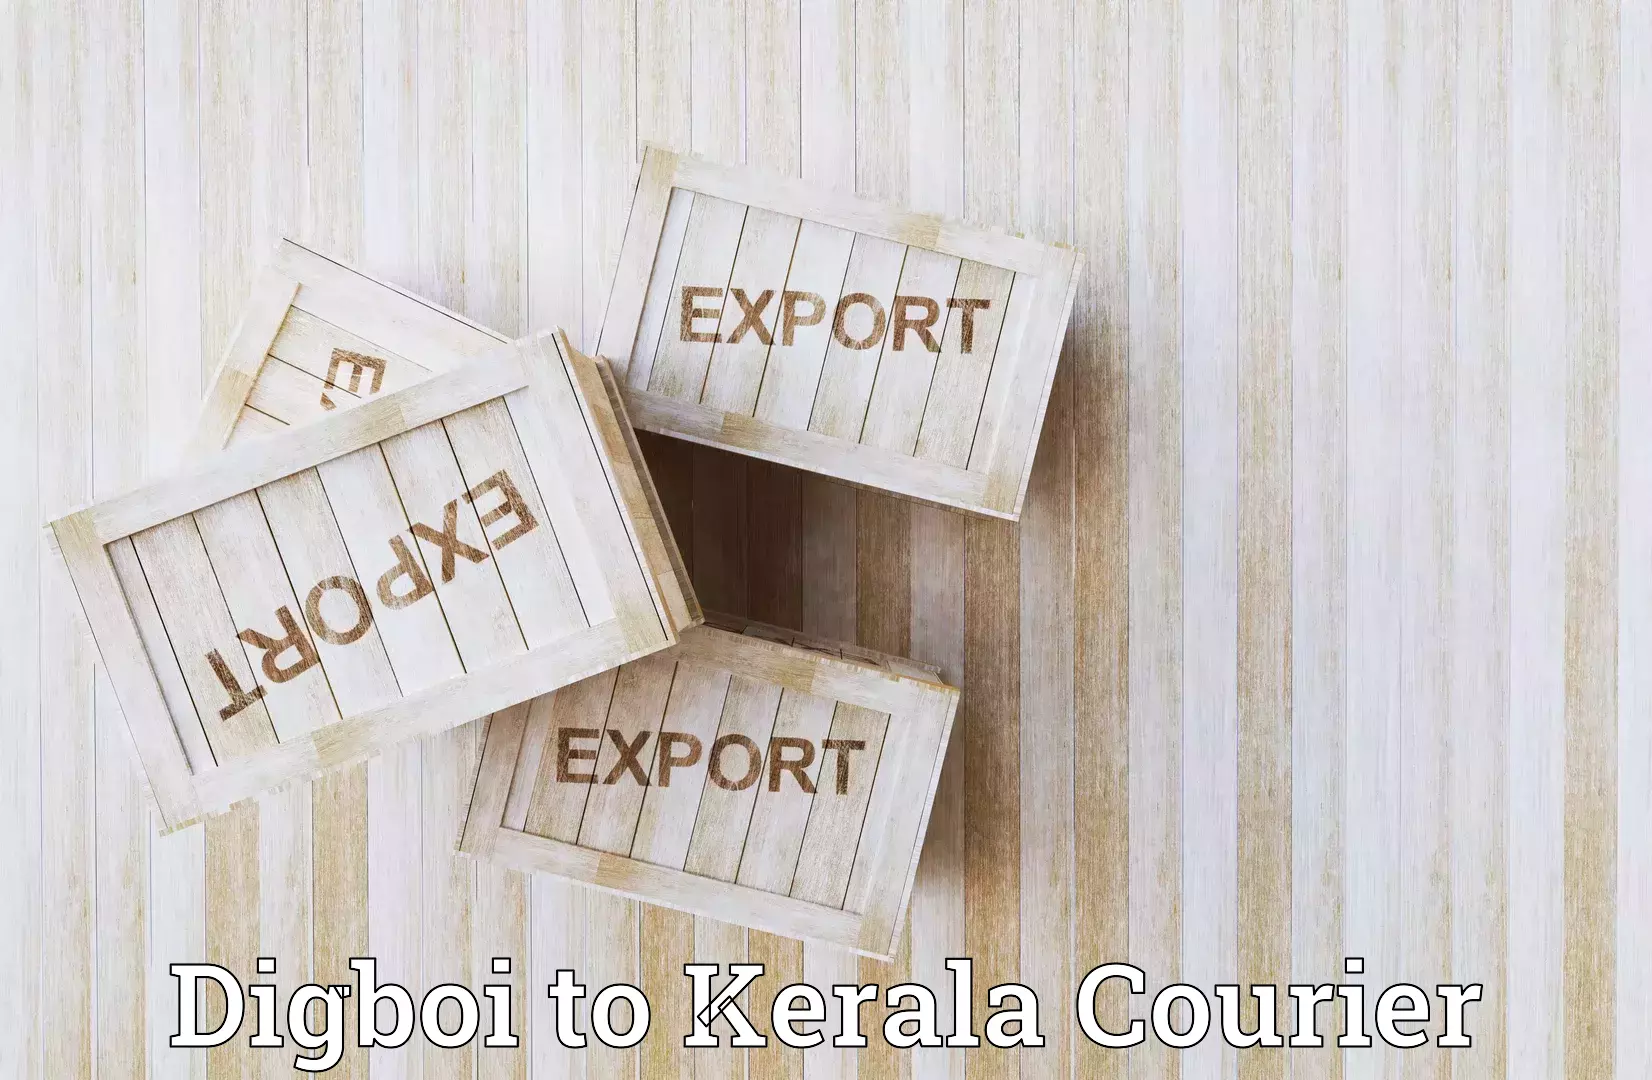 Seamless shipping experience Digboi to Cochin Port Kochi